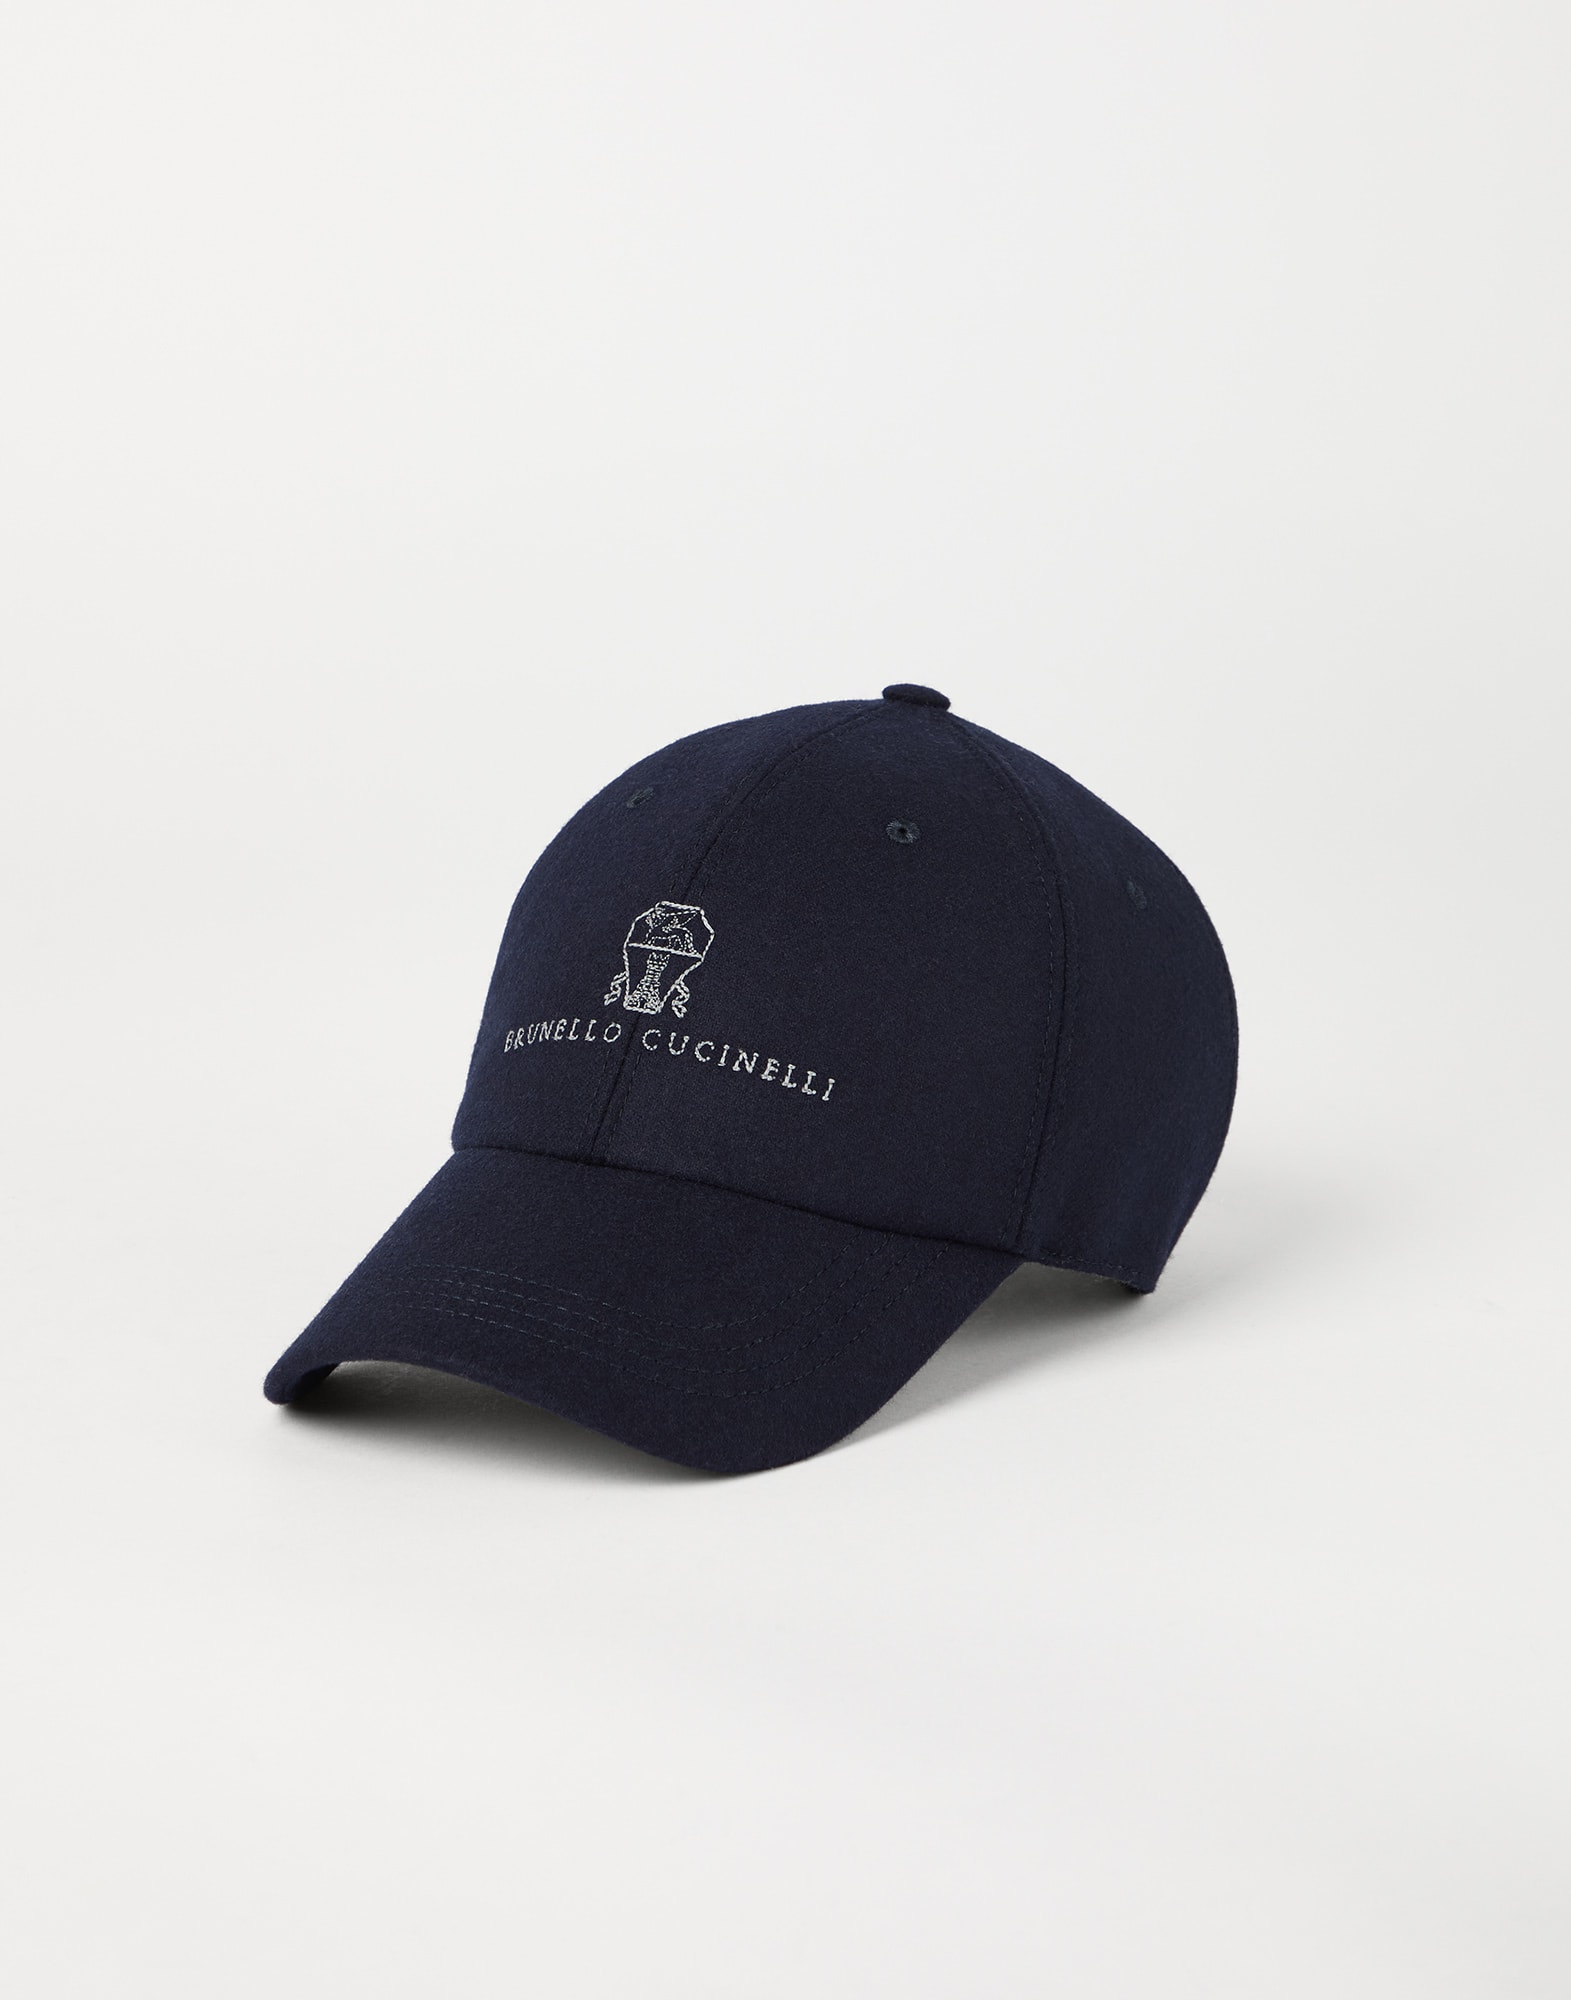 Hats & Caps - Front view